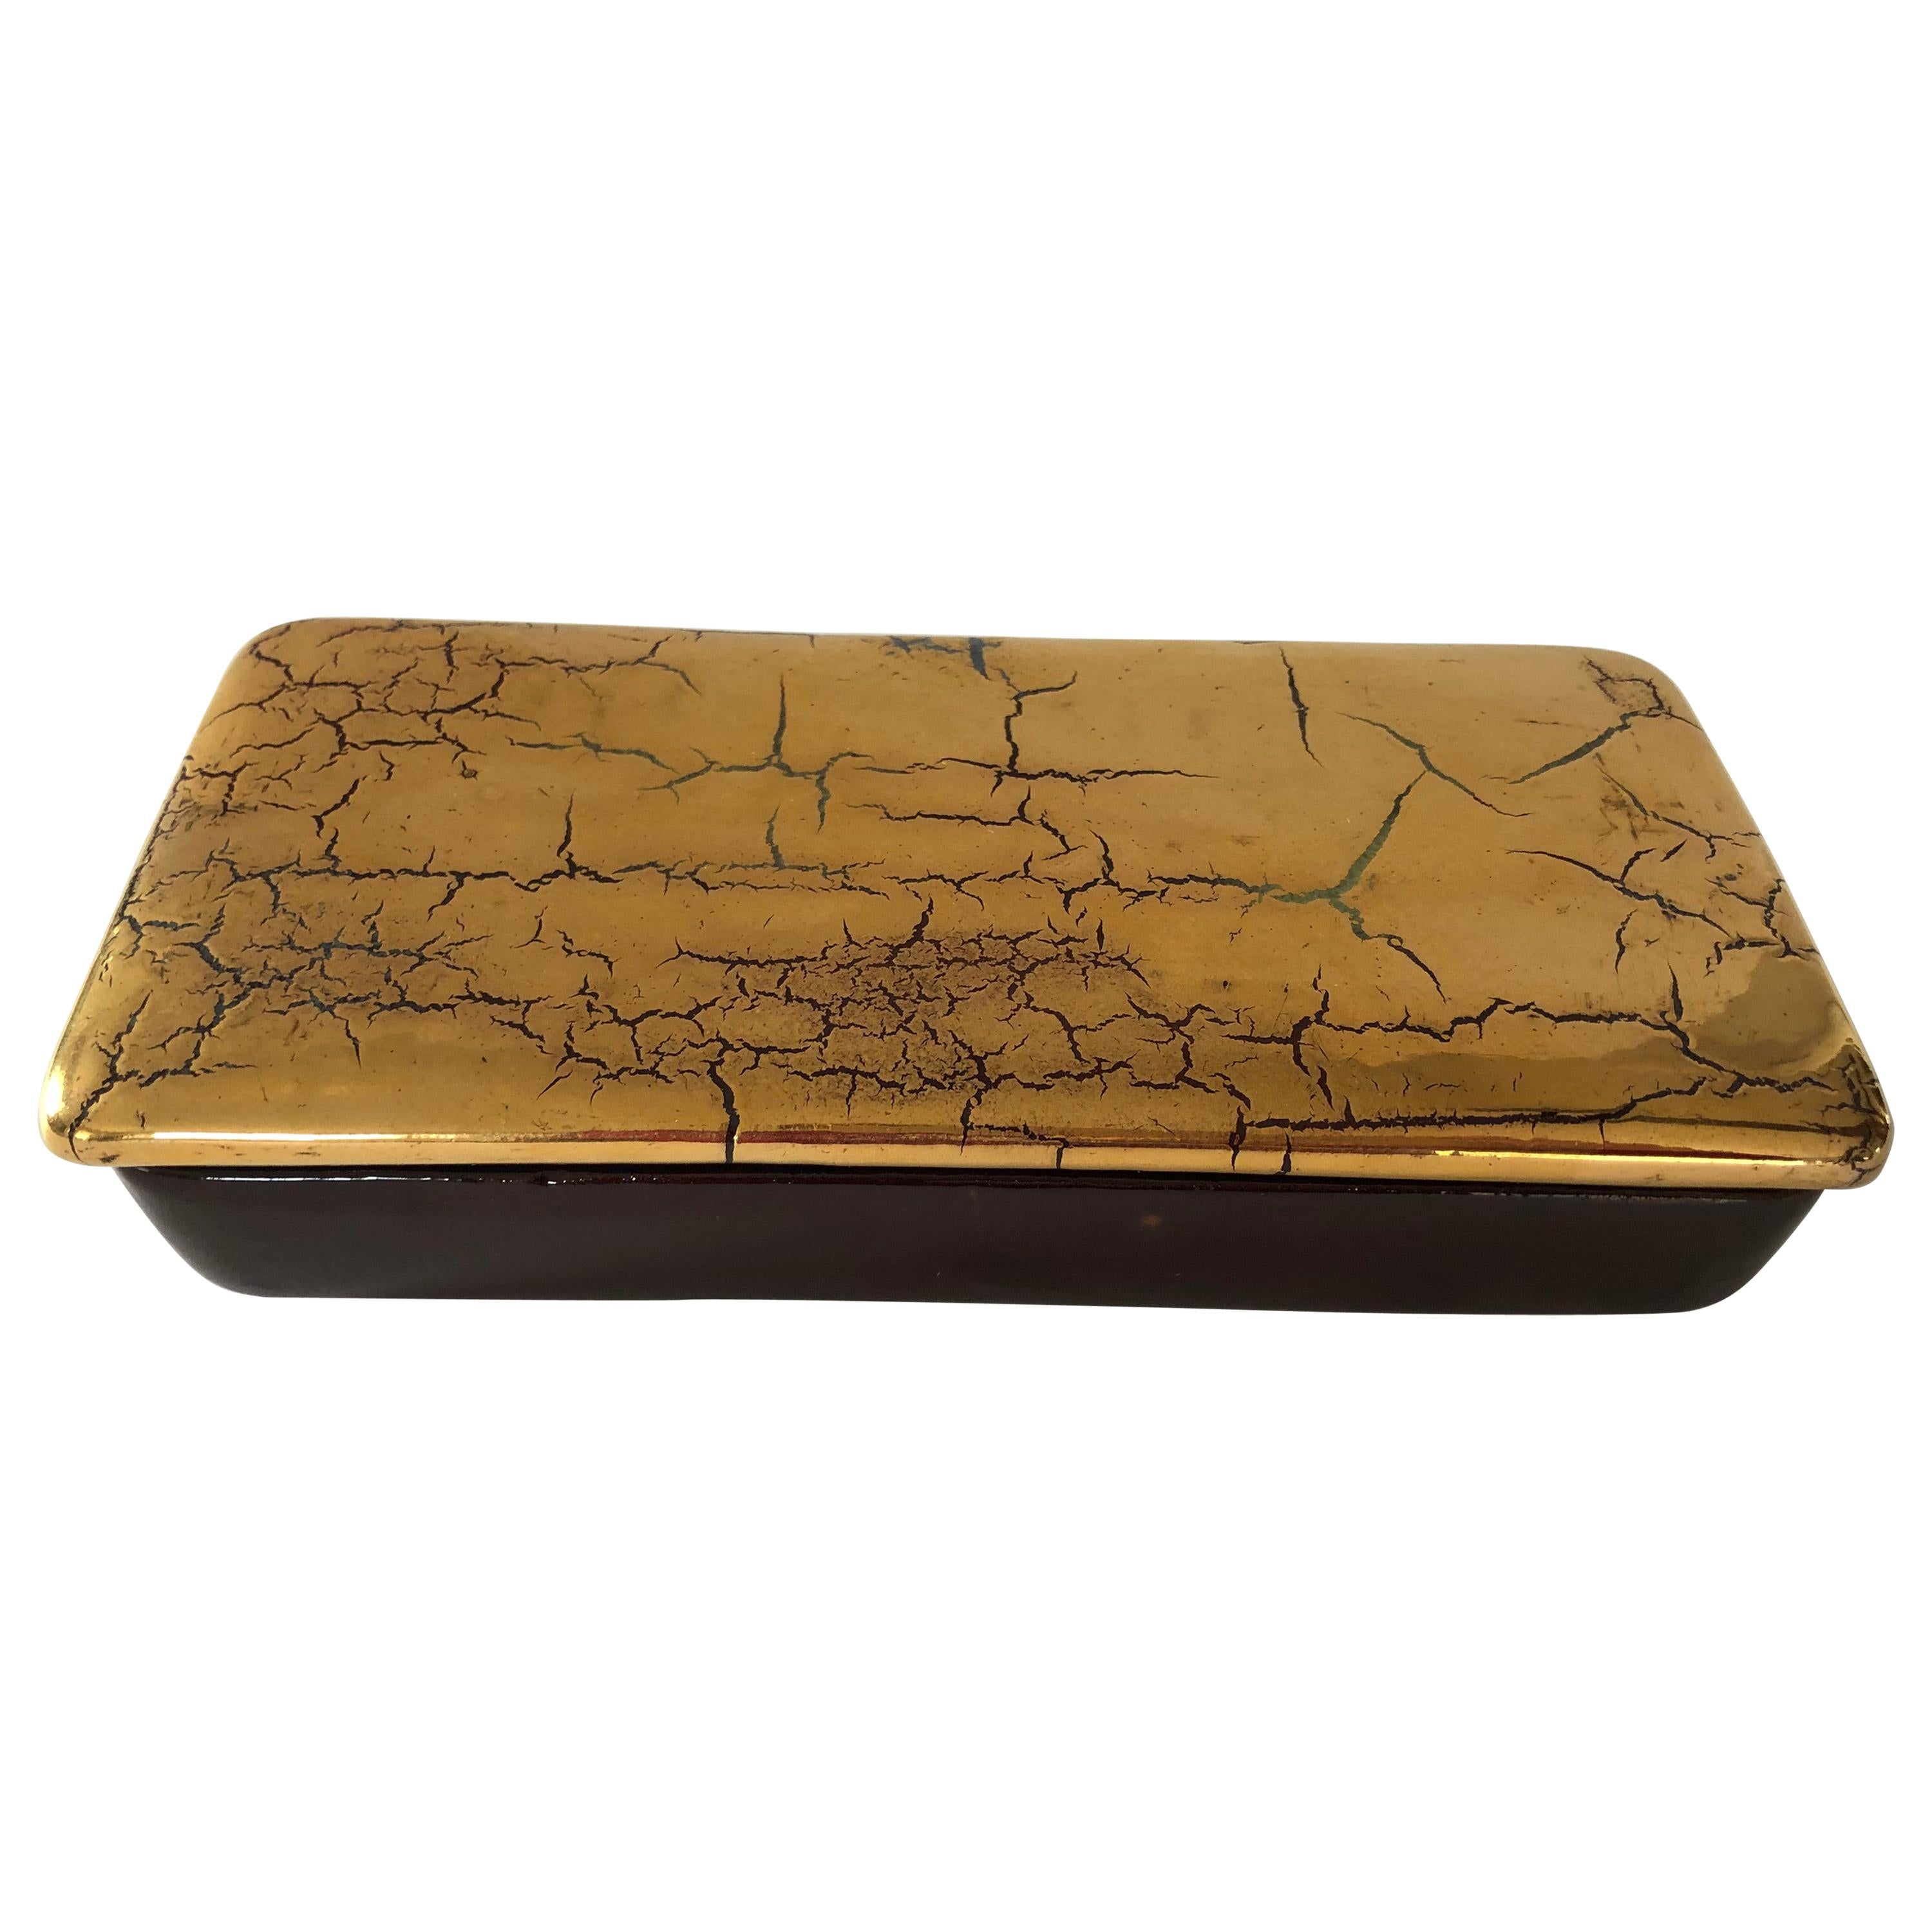 Striking Signed Bitossi Italian Box in Crackled Gold Glaze